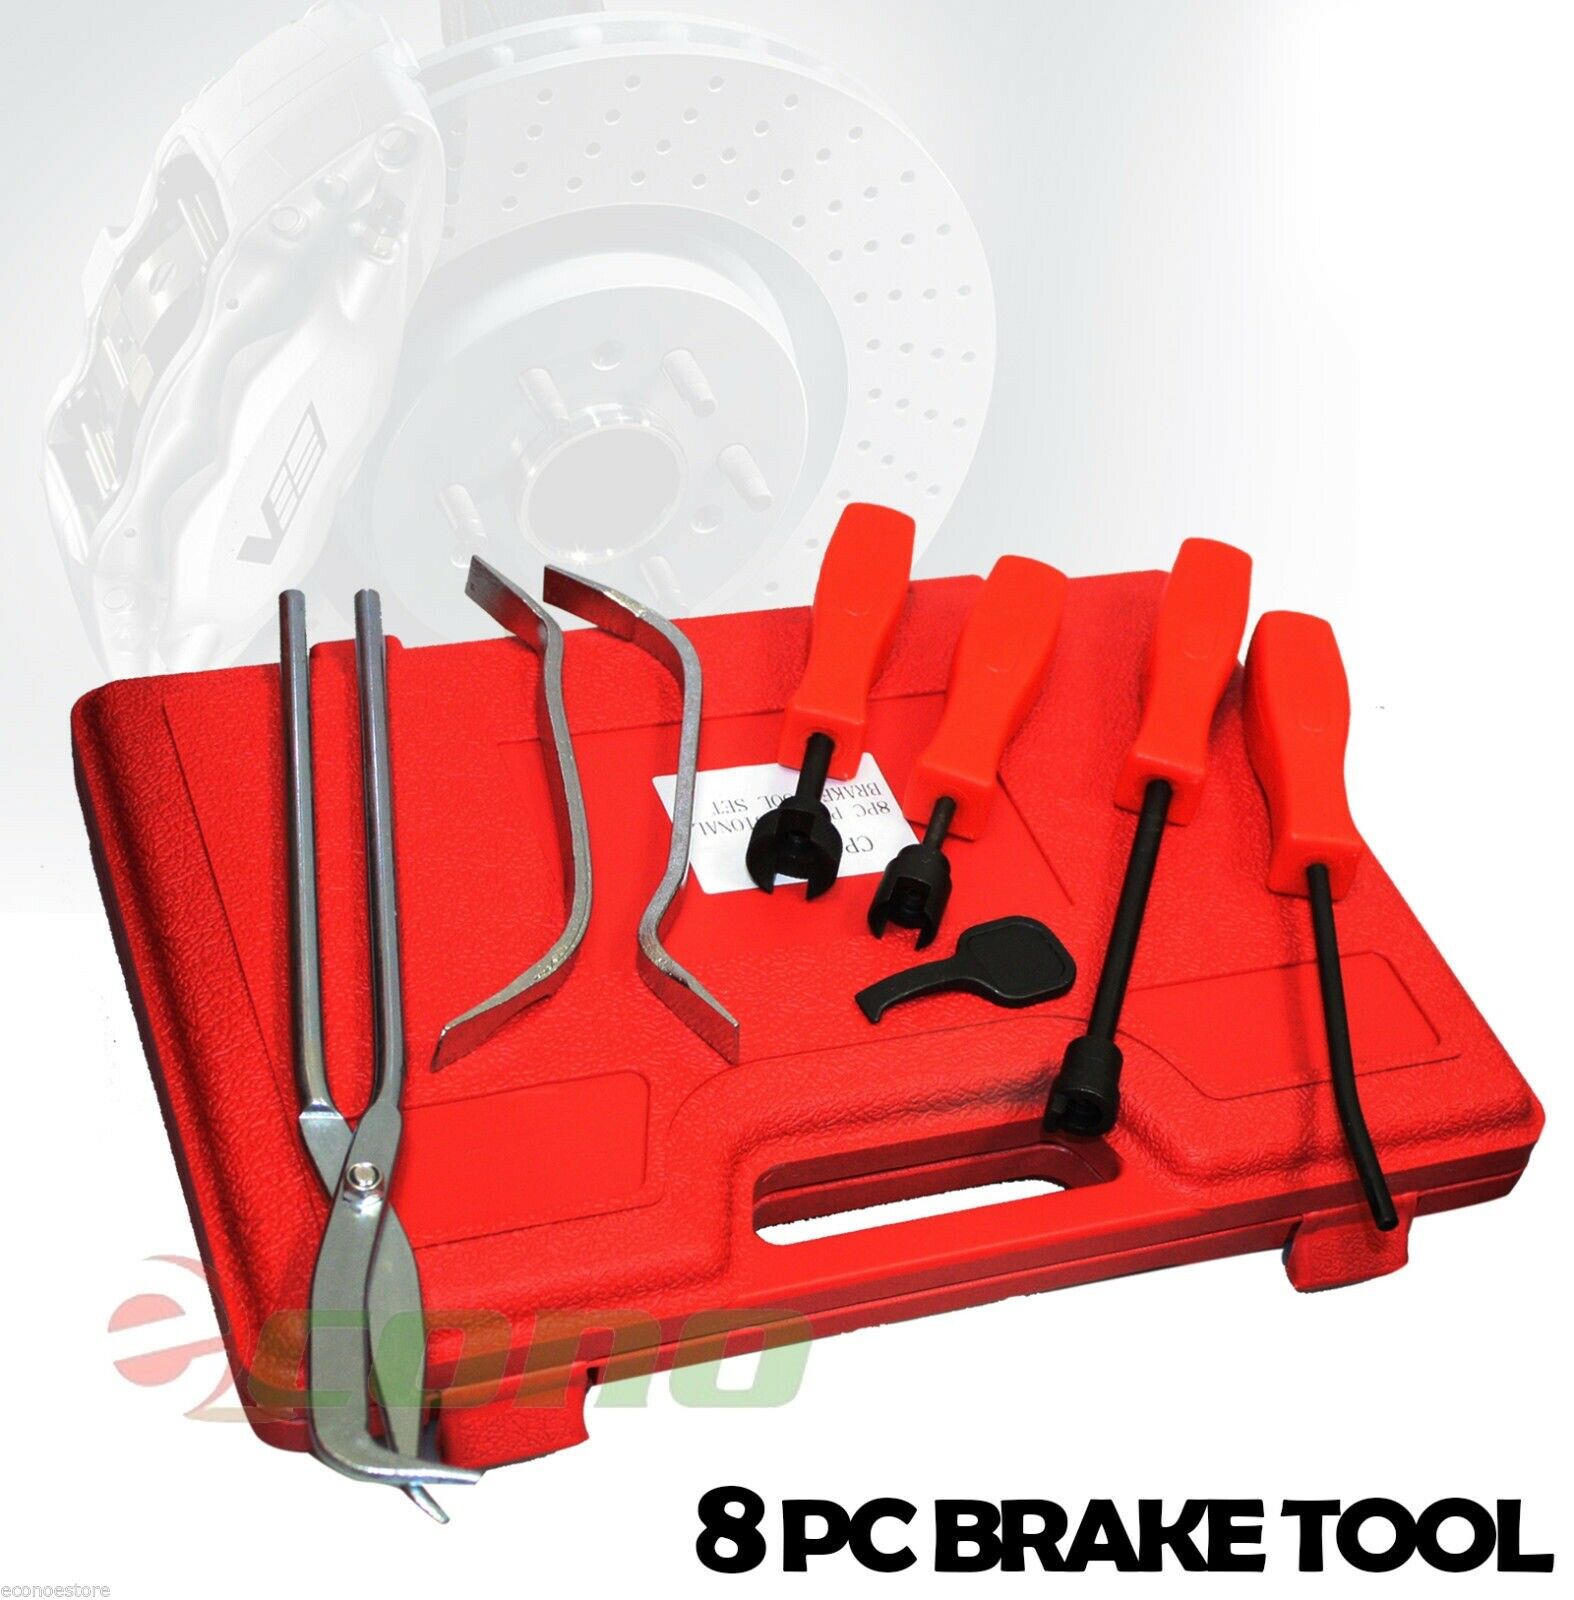 8PC Brake Service Tool Set SPRING INSTALLER REMOVER PLIERS & Adjustment Spoon